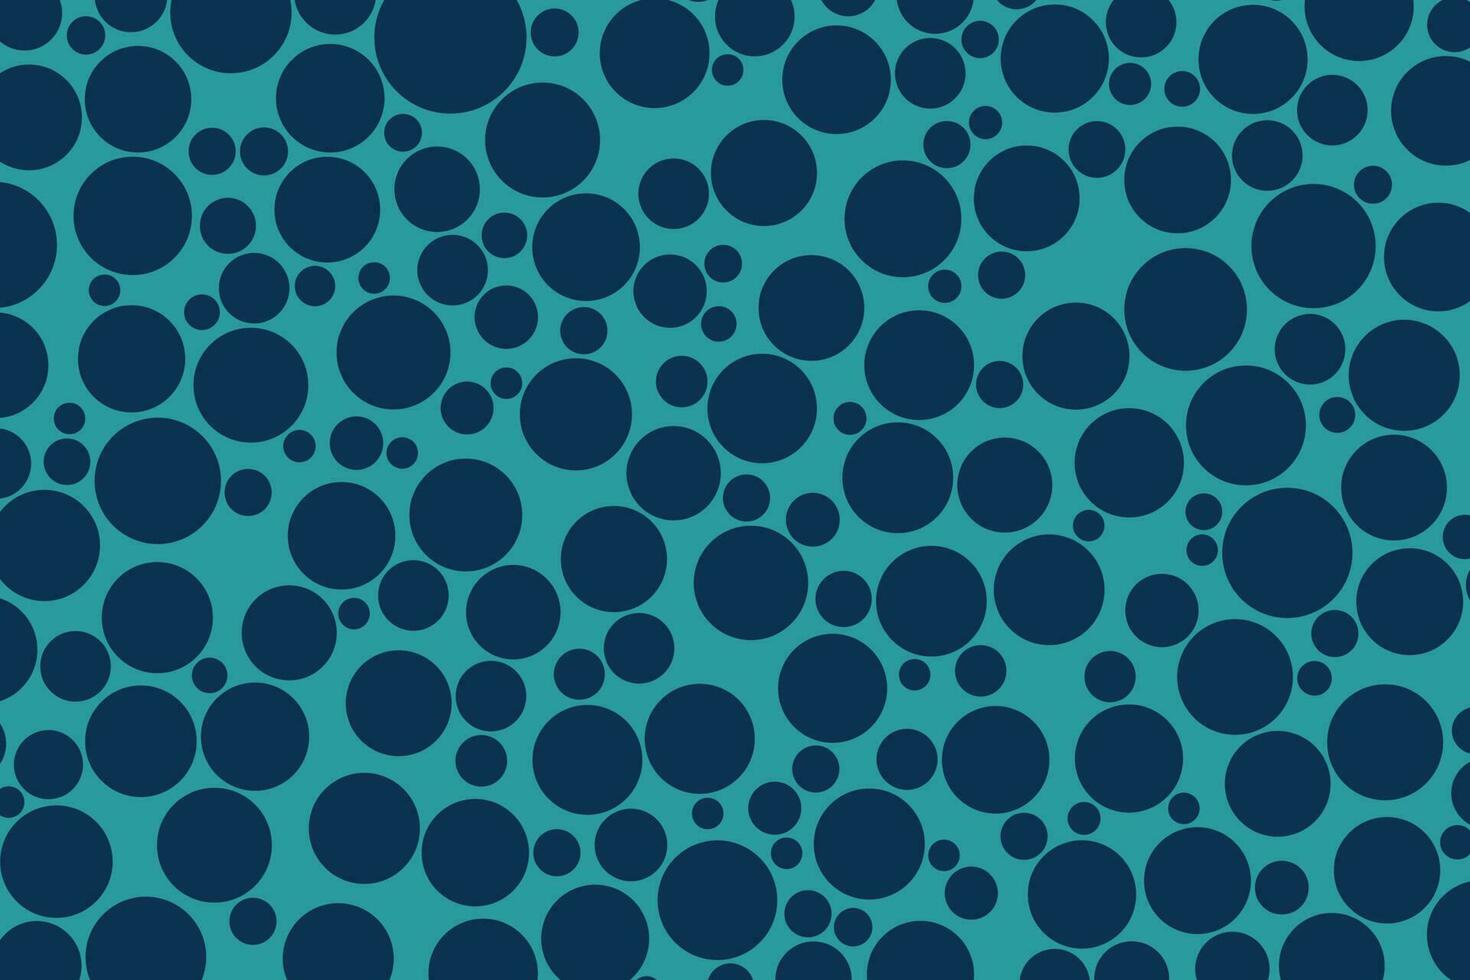 Random chaotic circle confetti background. Vector illustration.